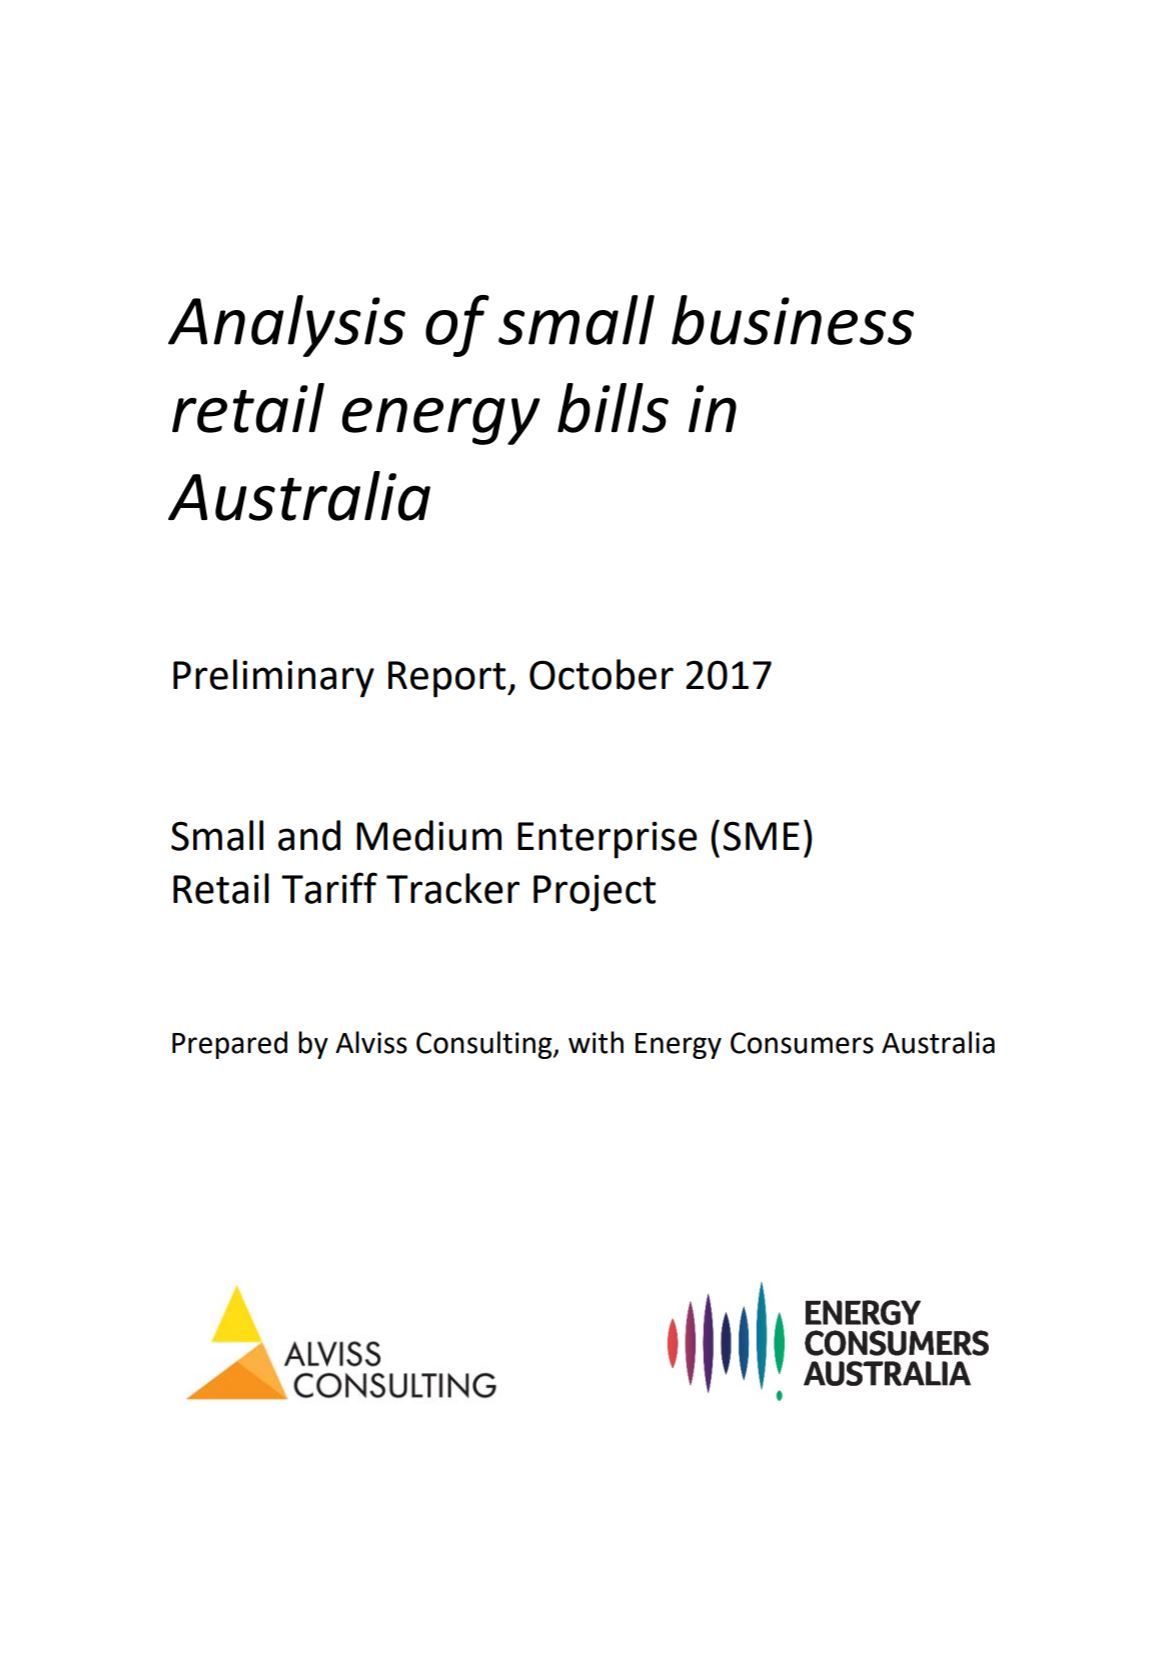 SME Retail Tariff Tracker Preliminary Report October 2017